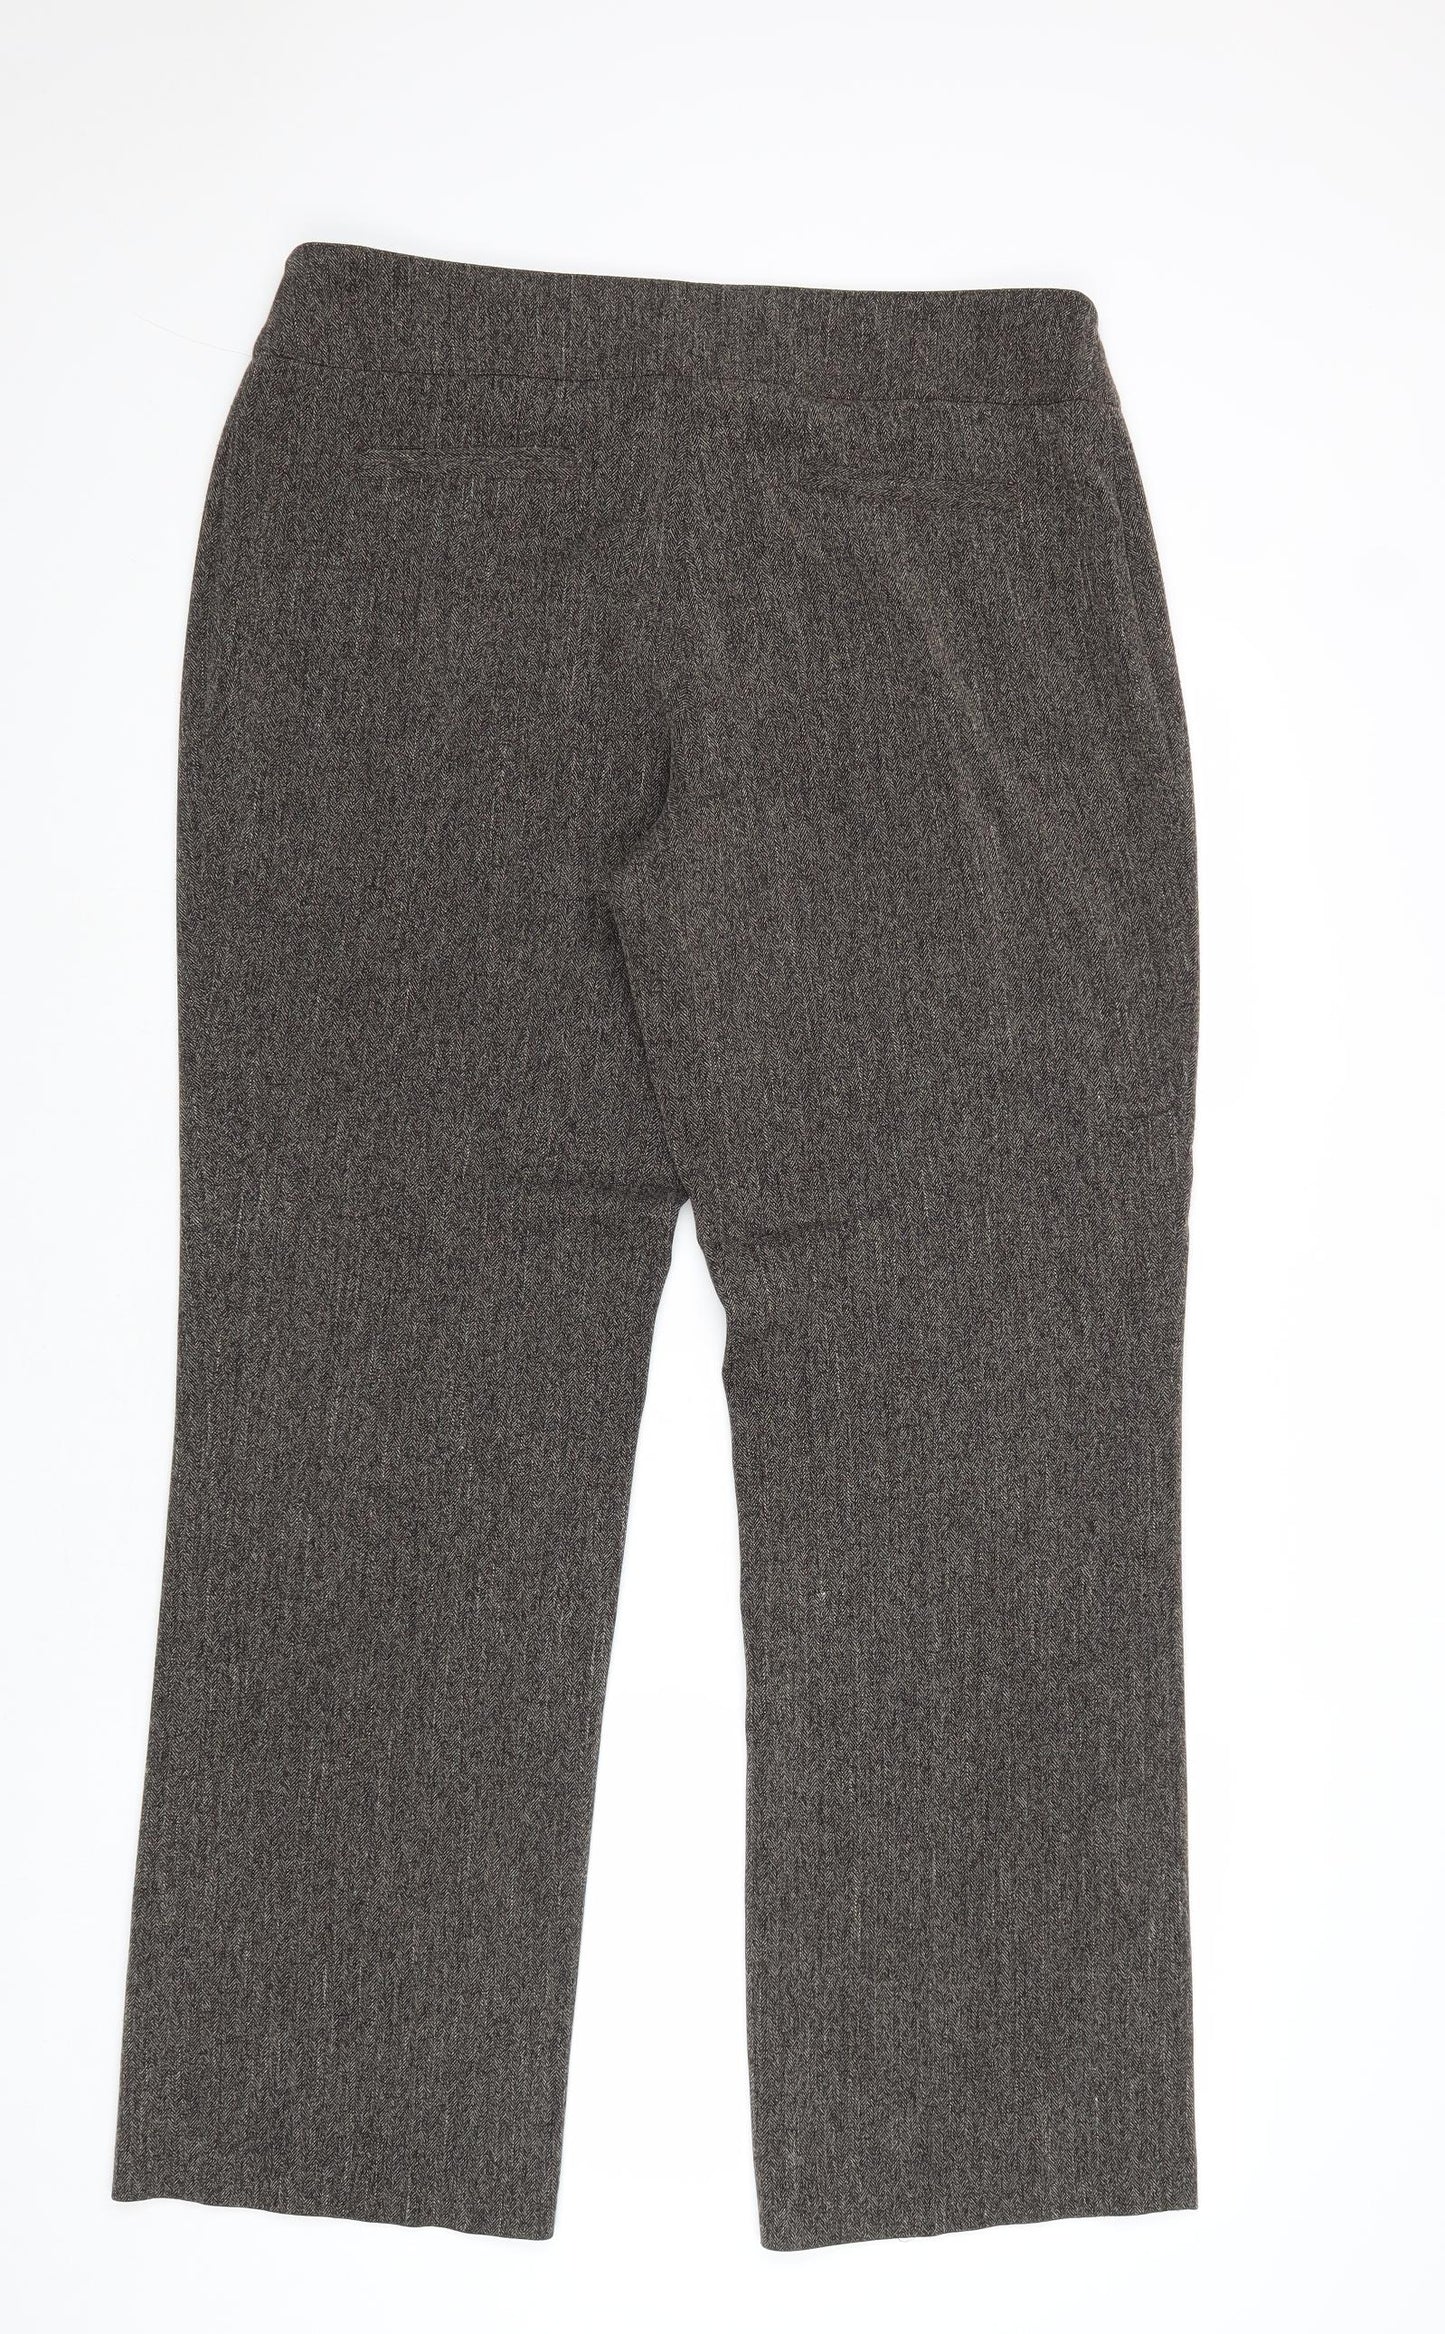 Klass Womens Grey Polyester Trousers Size 16 Regular Zip